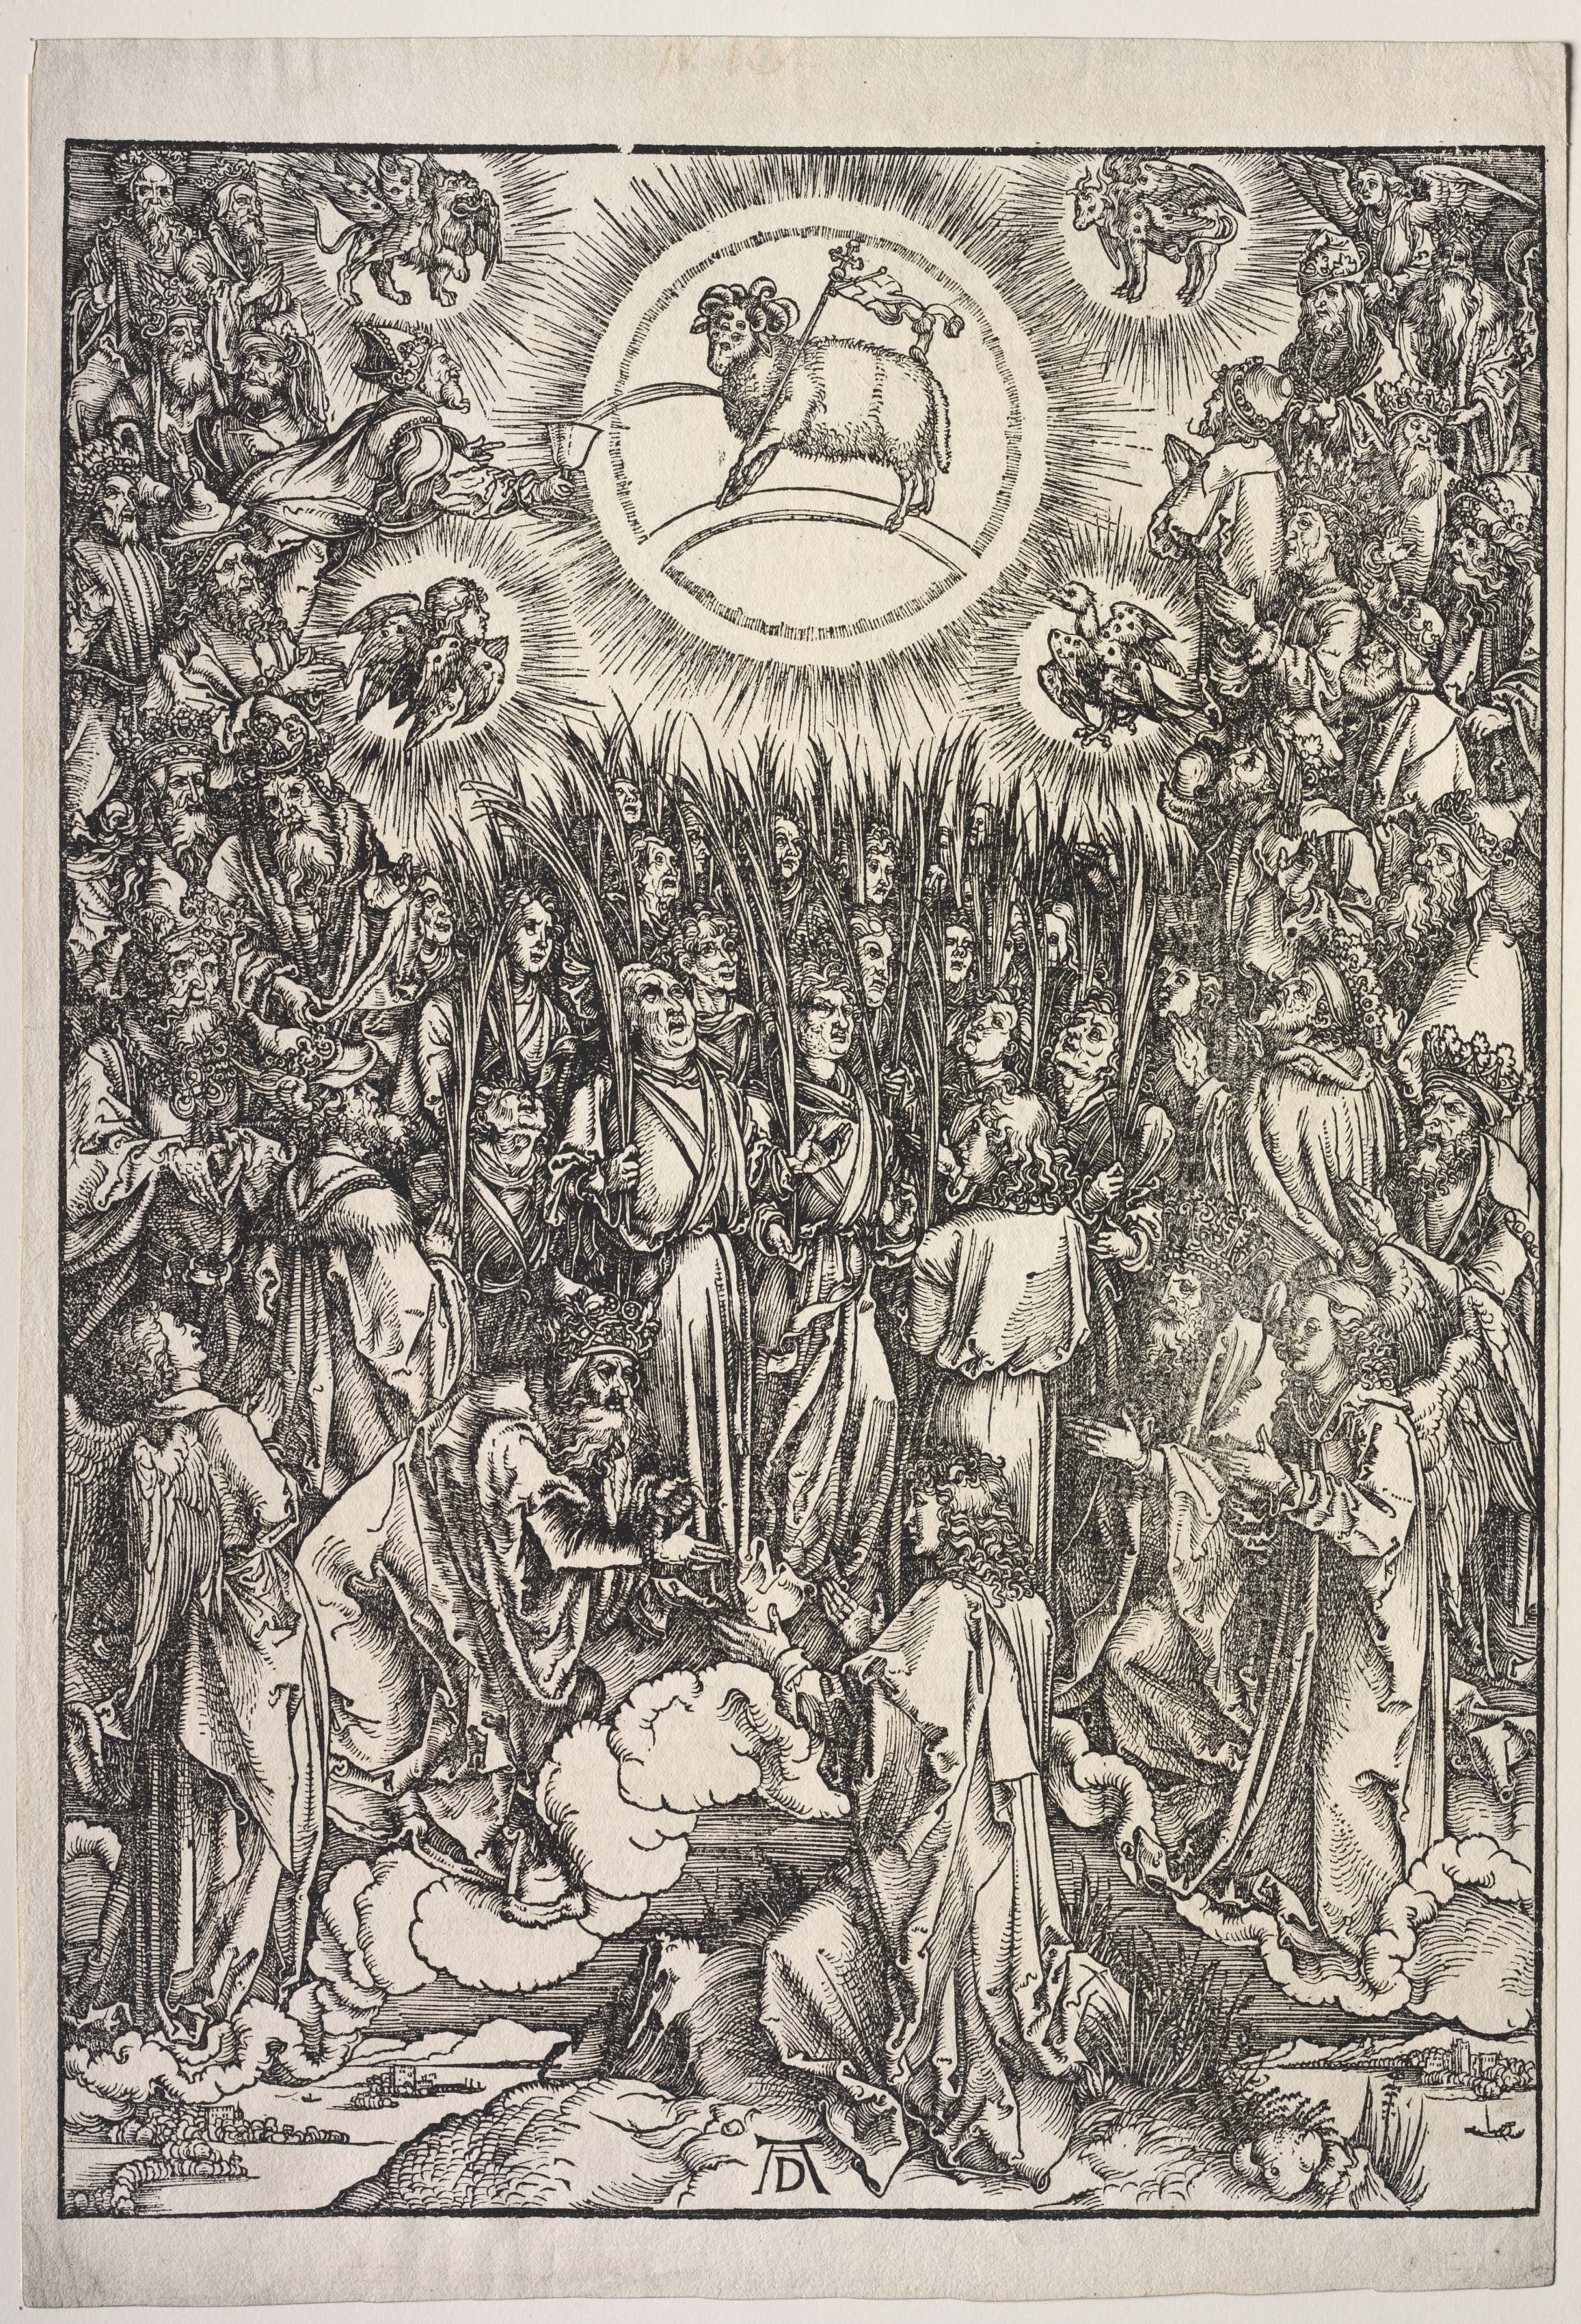 Revelation of St. John: The Adoration of the Lamb